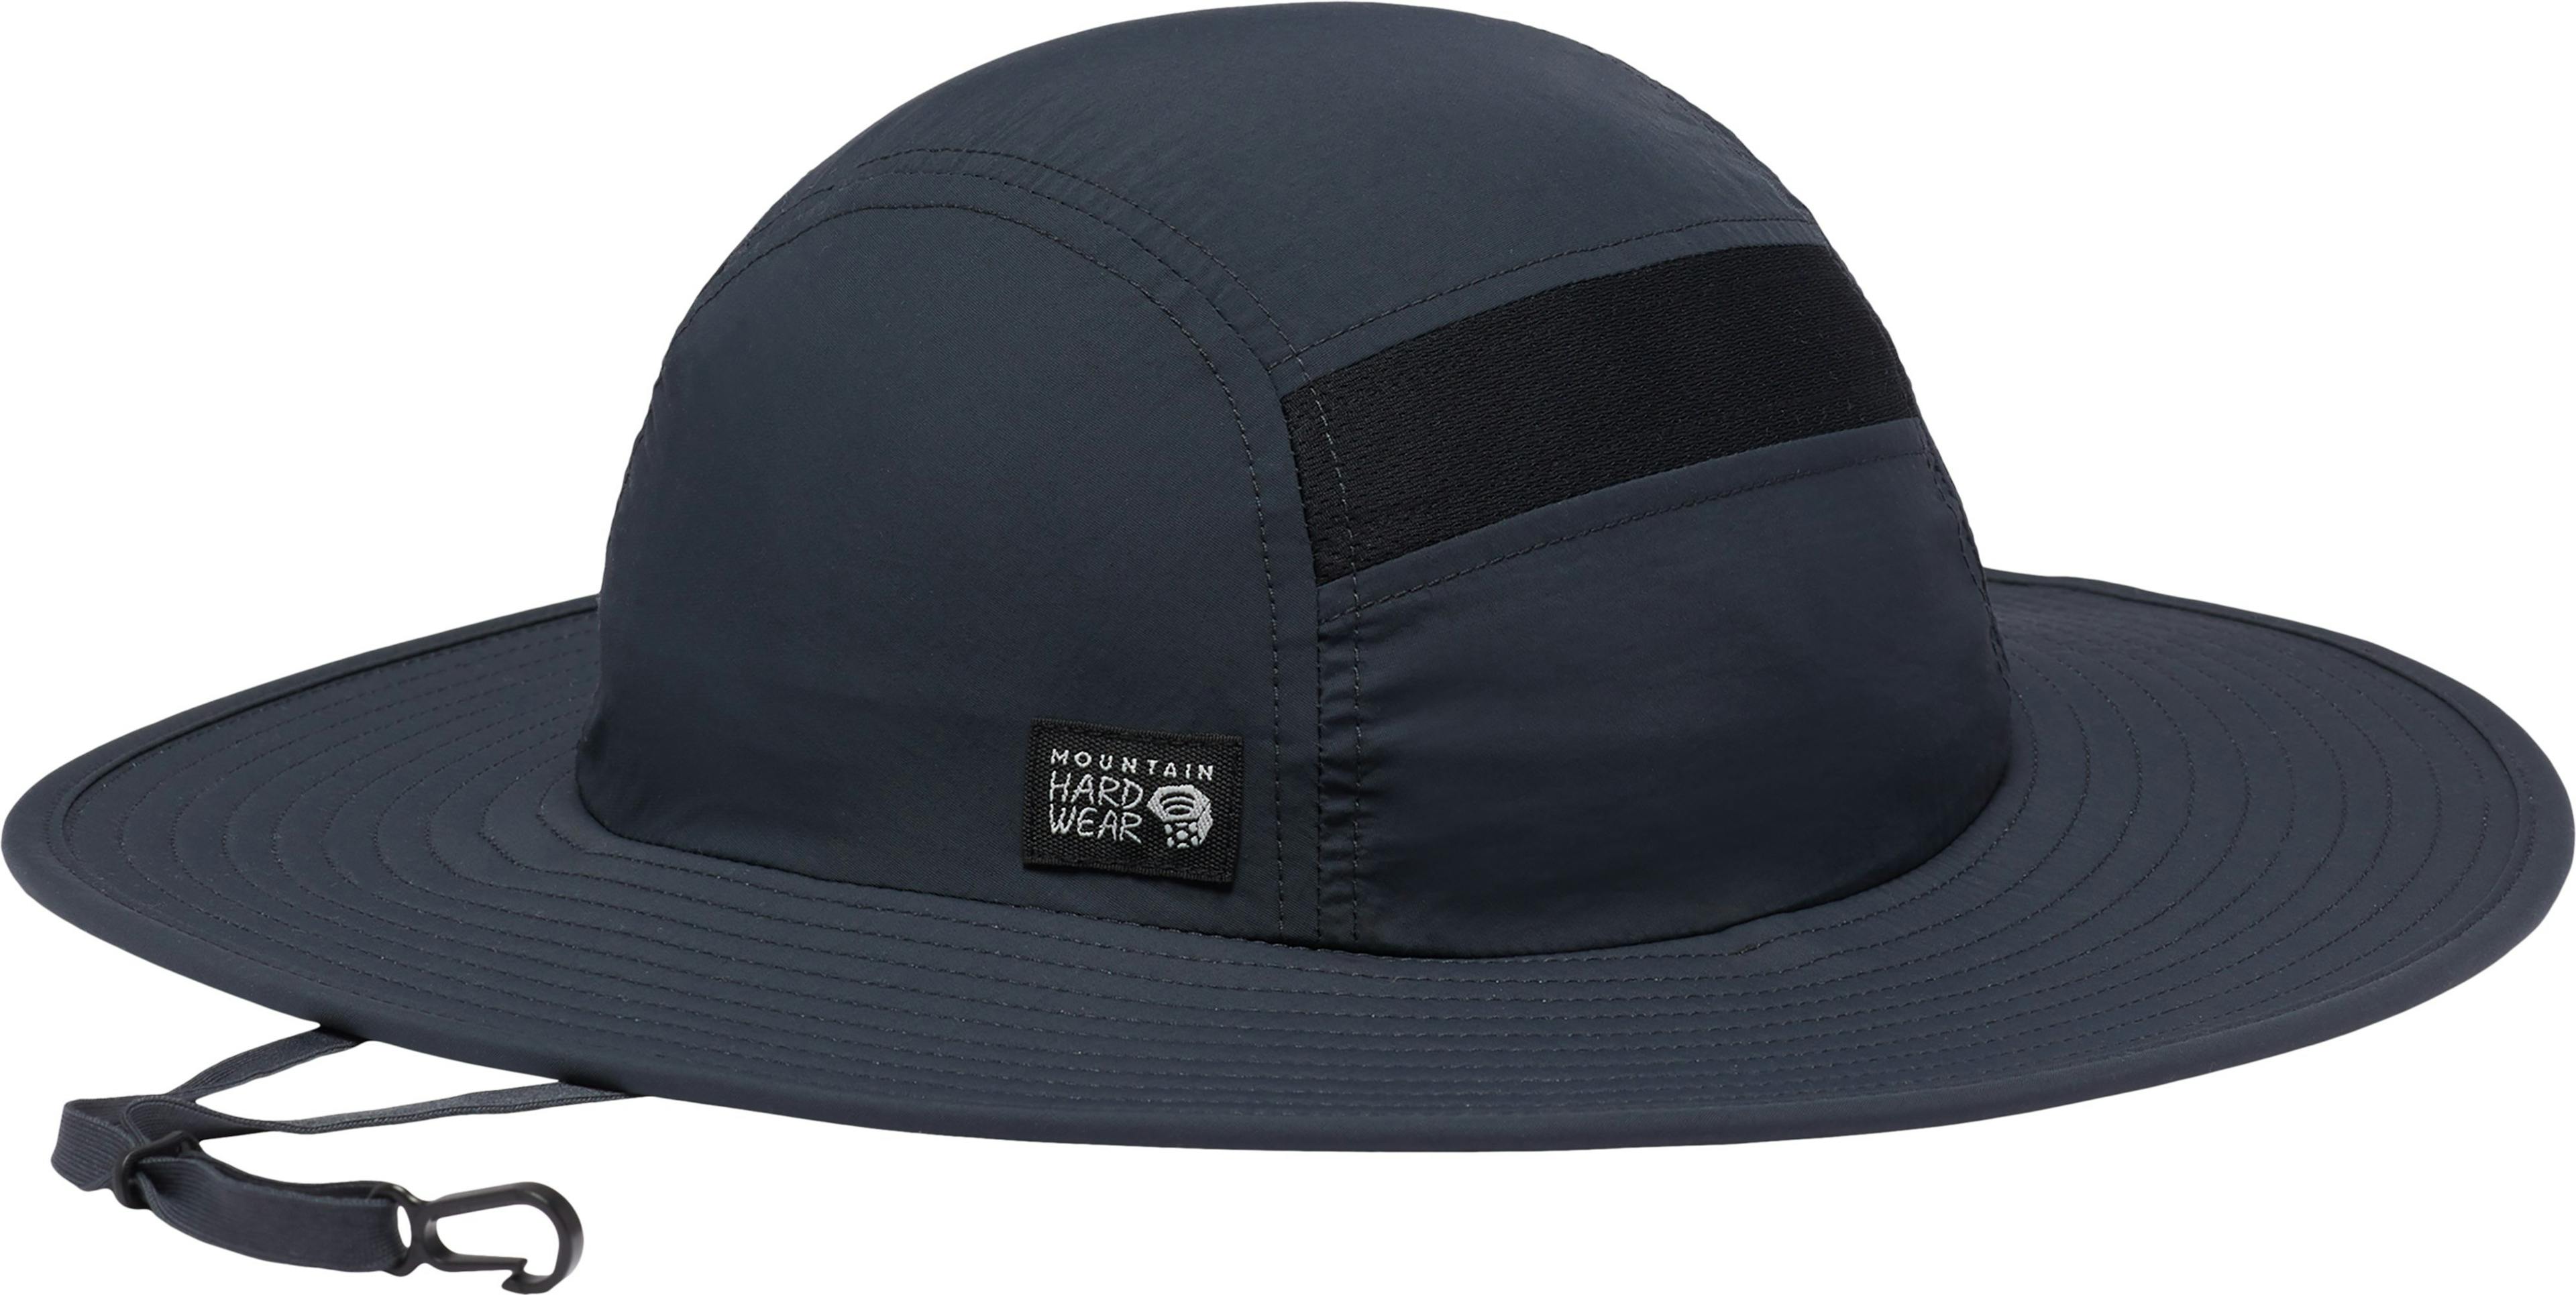 Product image for Chalkies Sun Hat - Men's